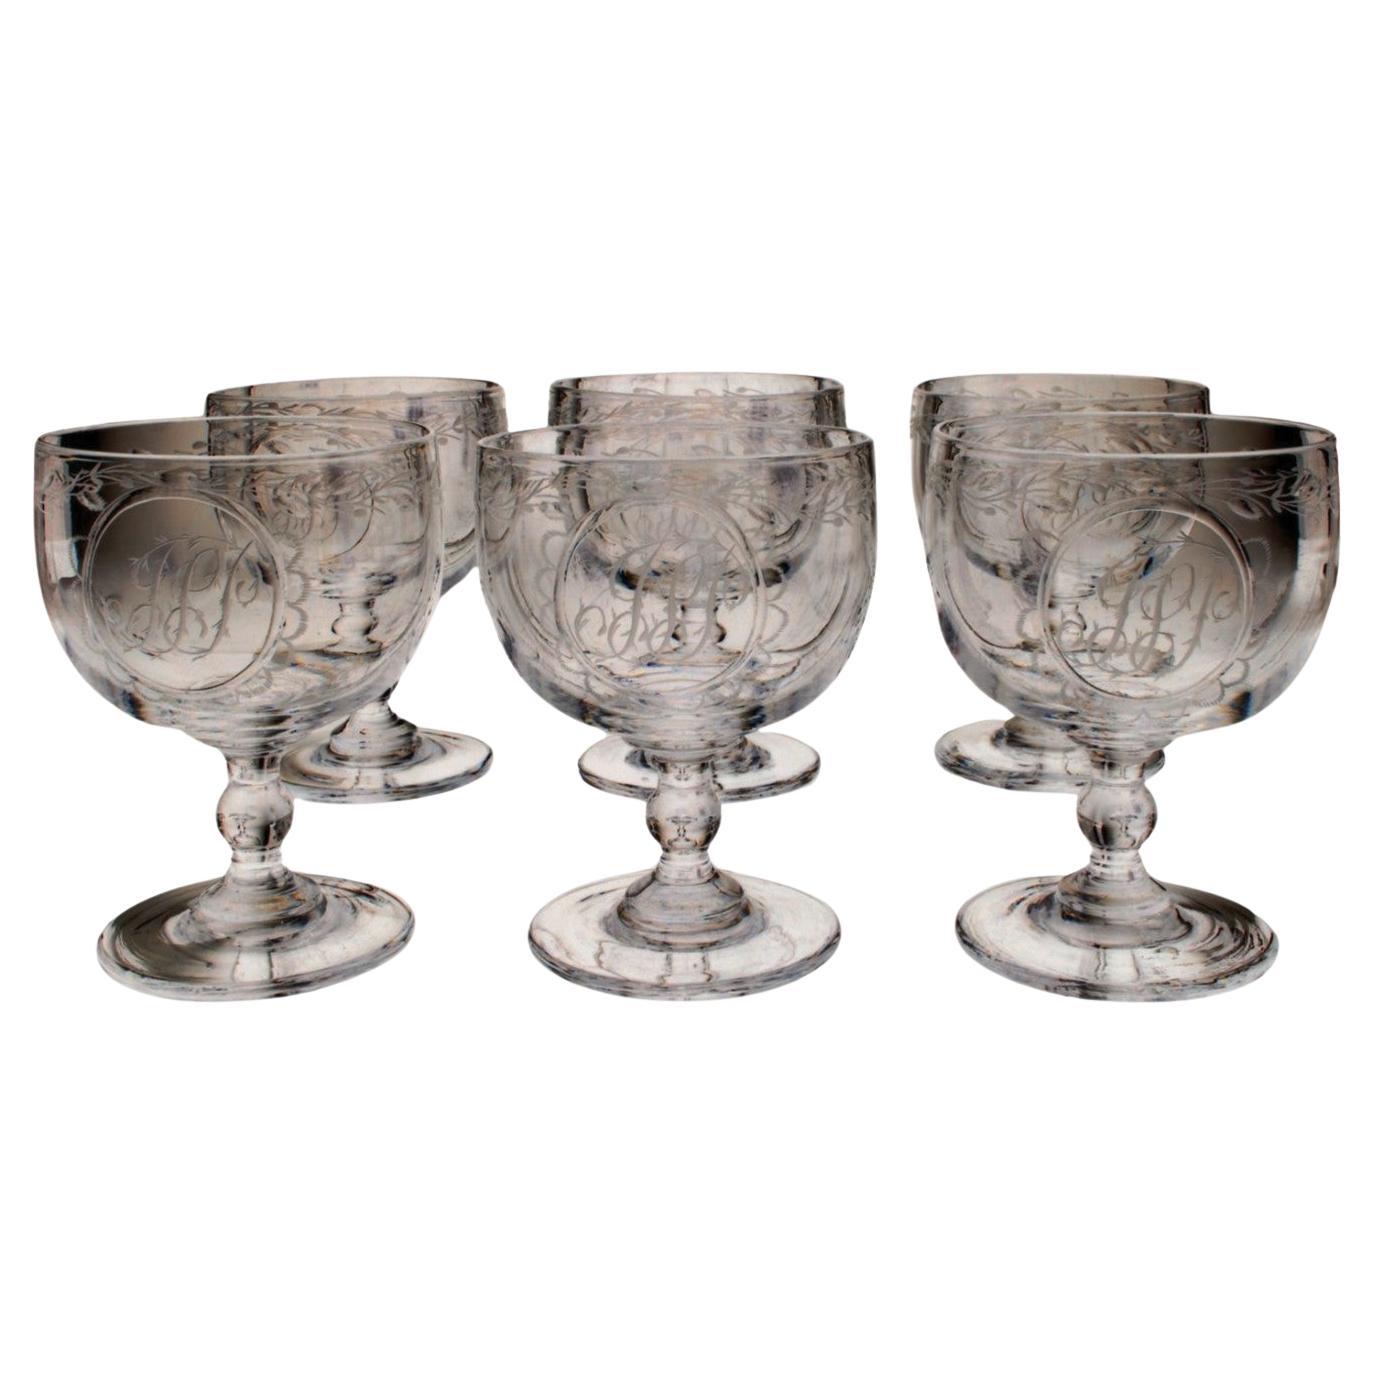 Set of six monogrammed JSP rummers (wine glasses), England, C1830